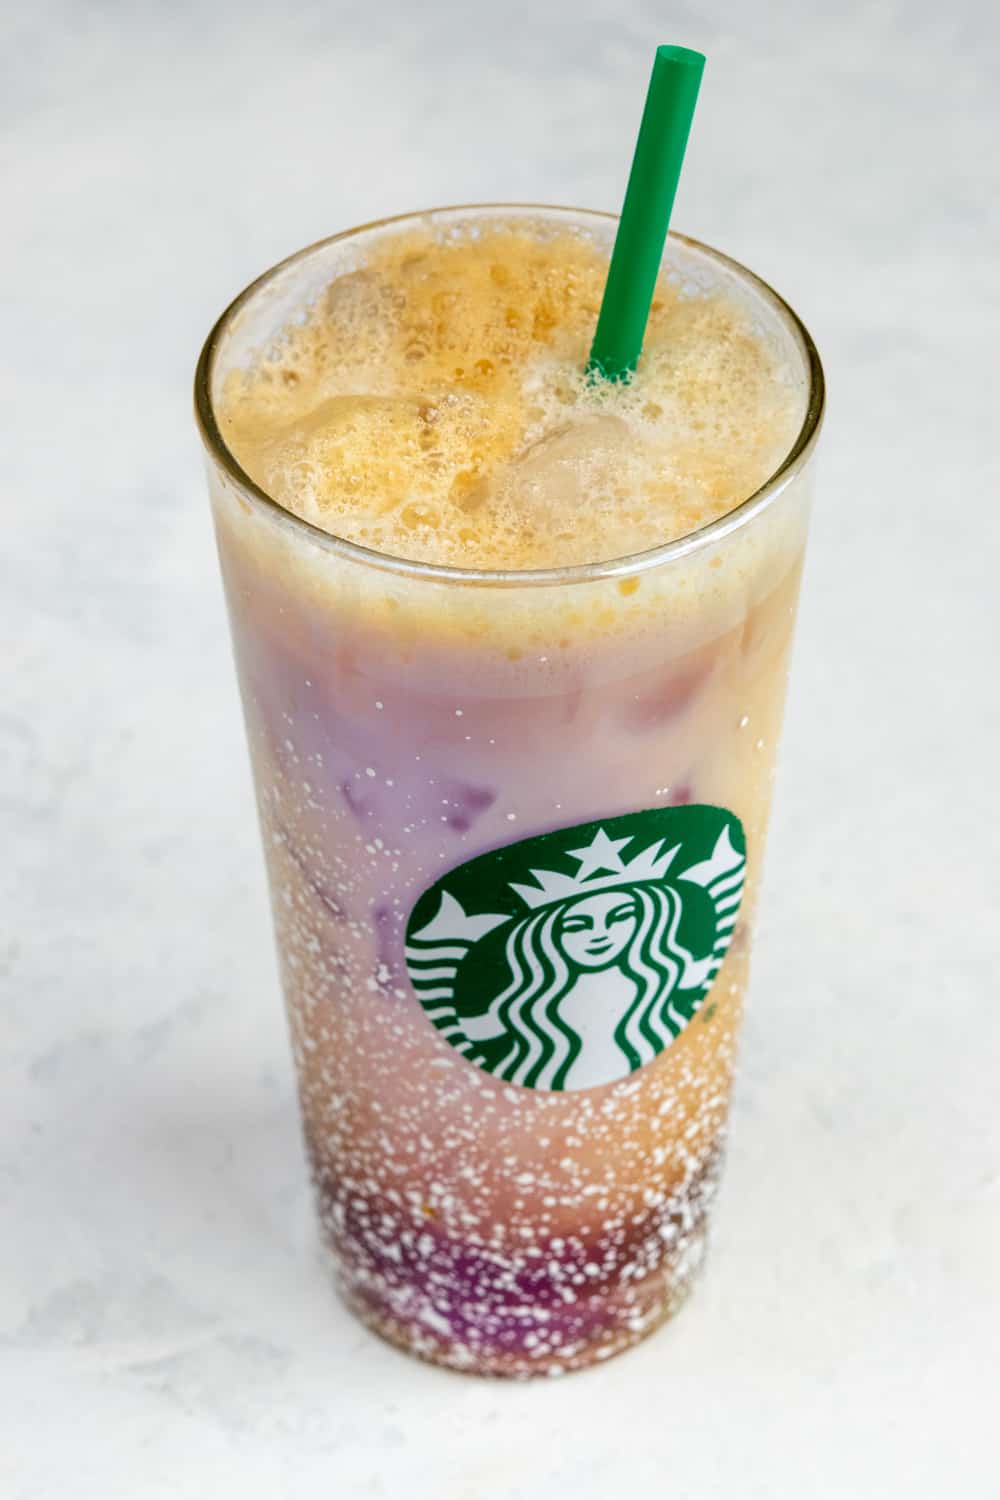 Homemade Iced Shaken Espresso in Starbucks glass with straw.